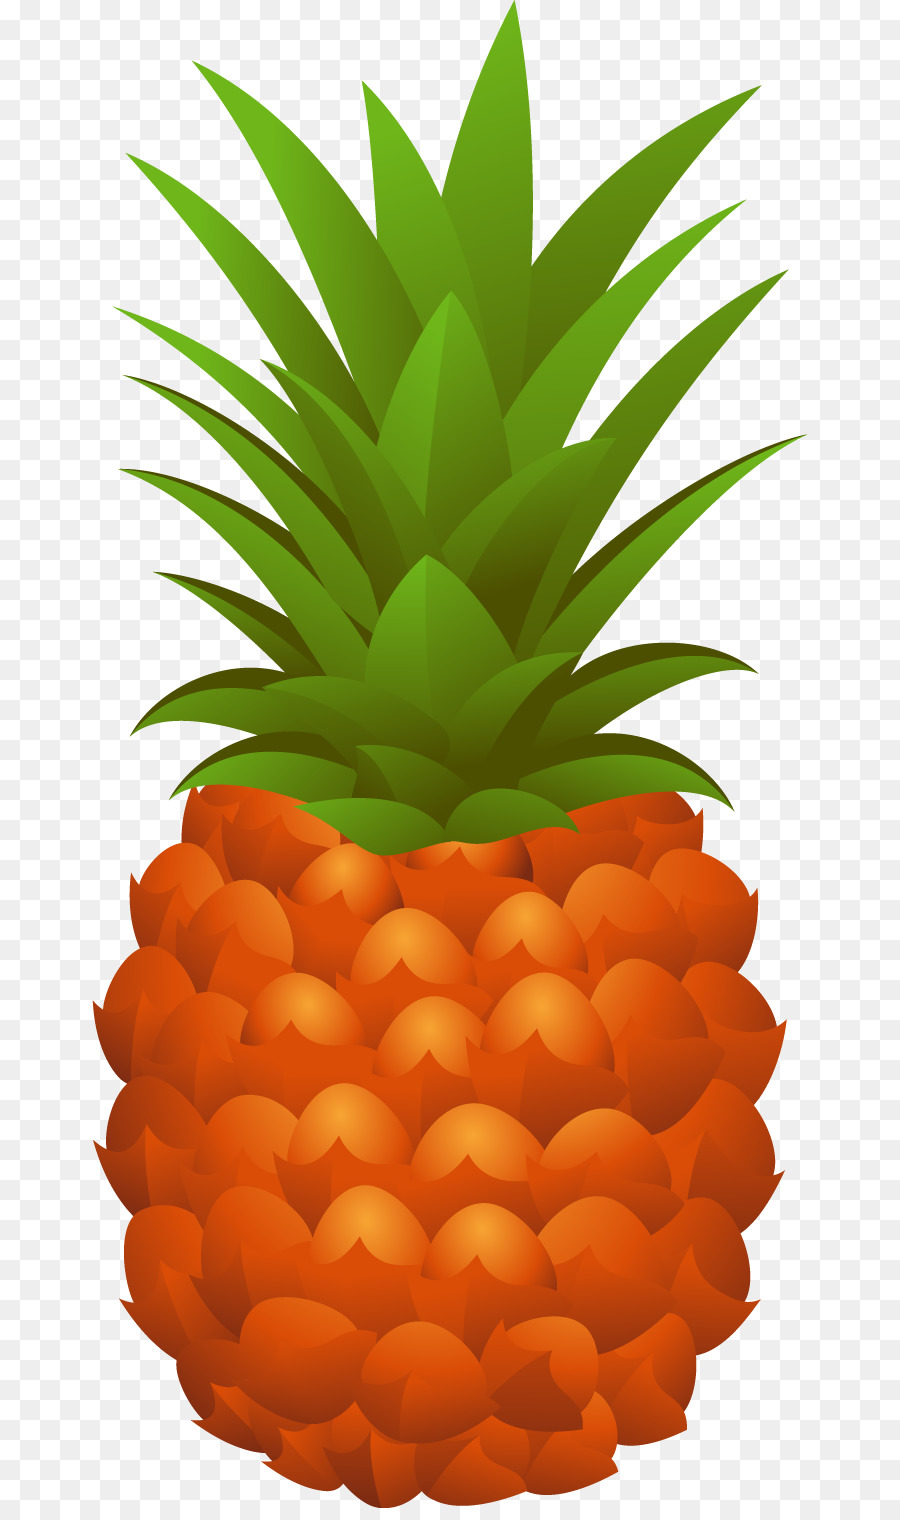 Pineapple Cdr - Vector pineapple png download - 715*1508 - Free Transparent Pineapple png Download.